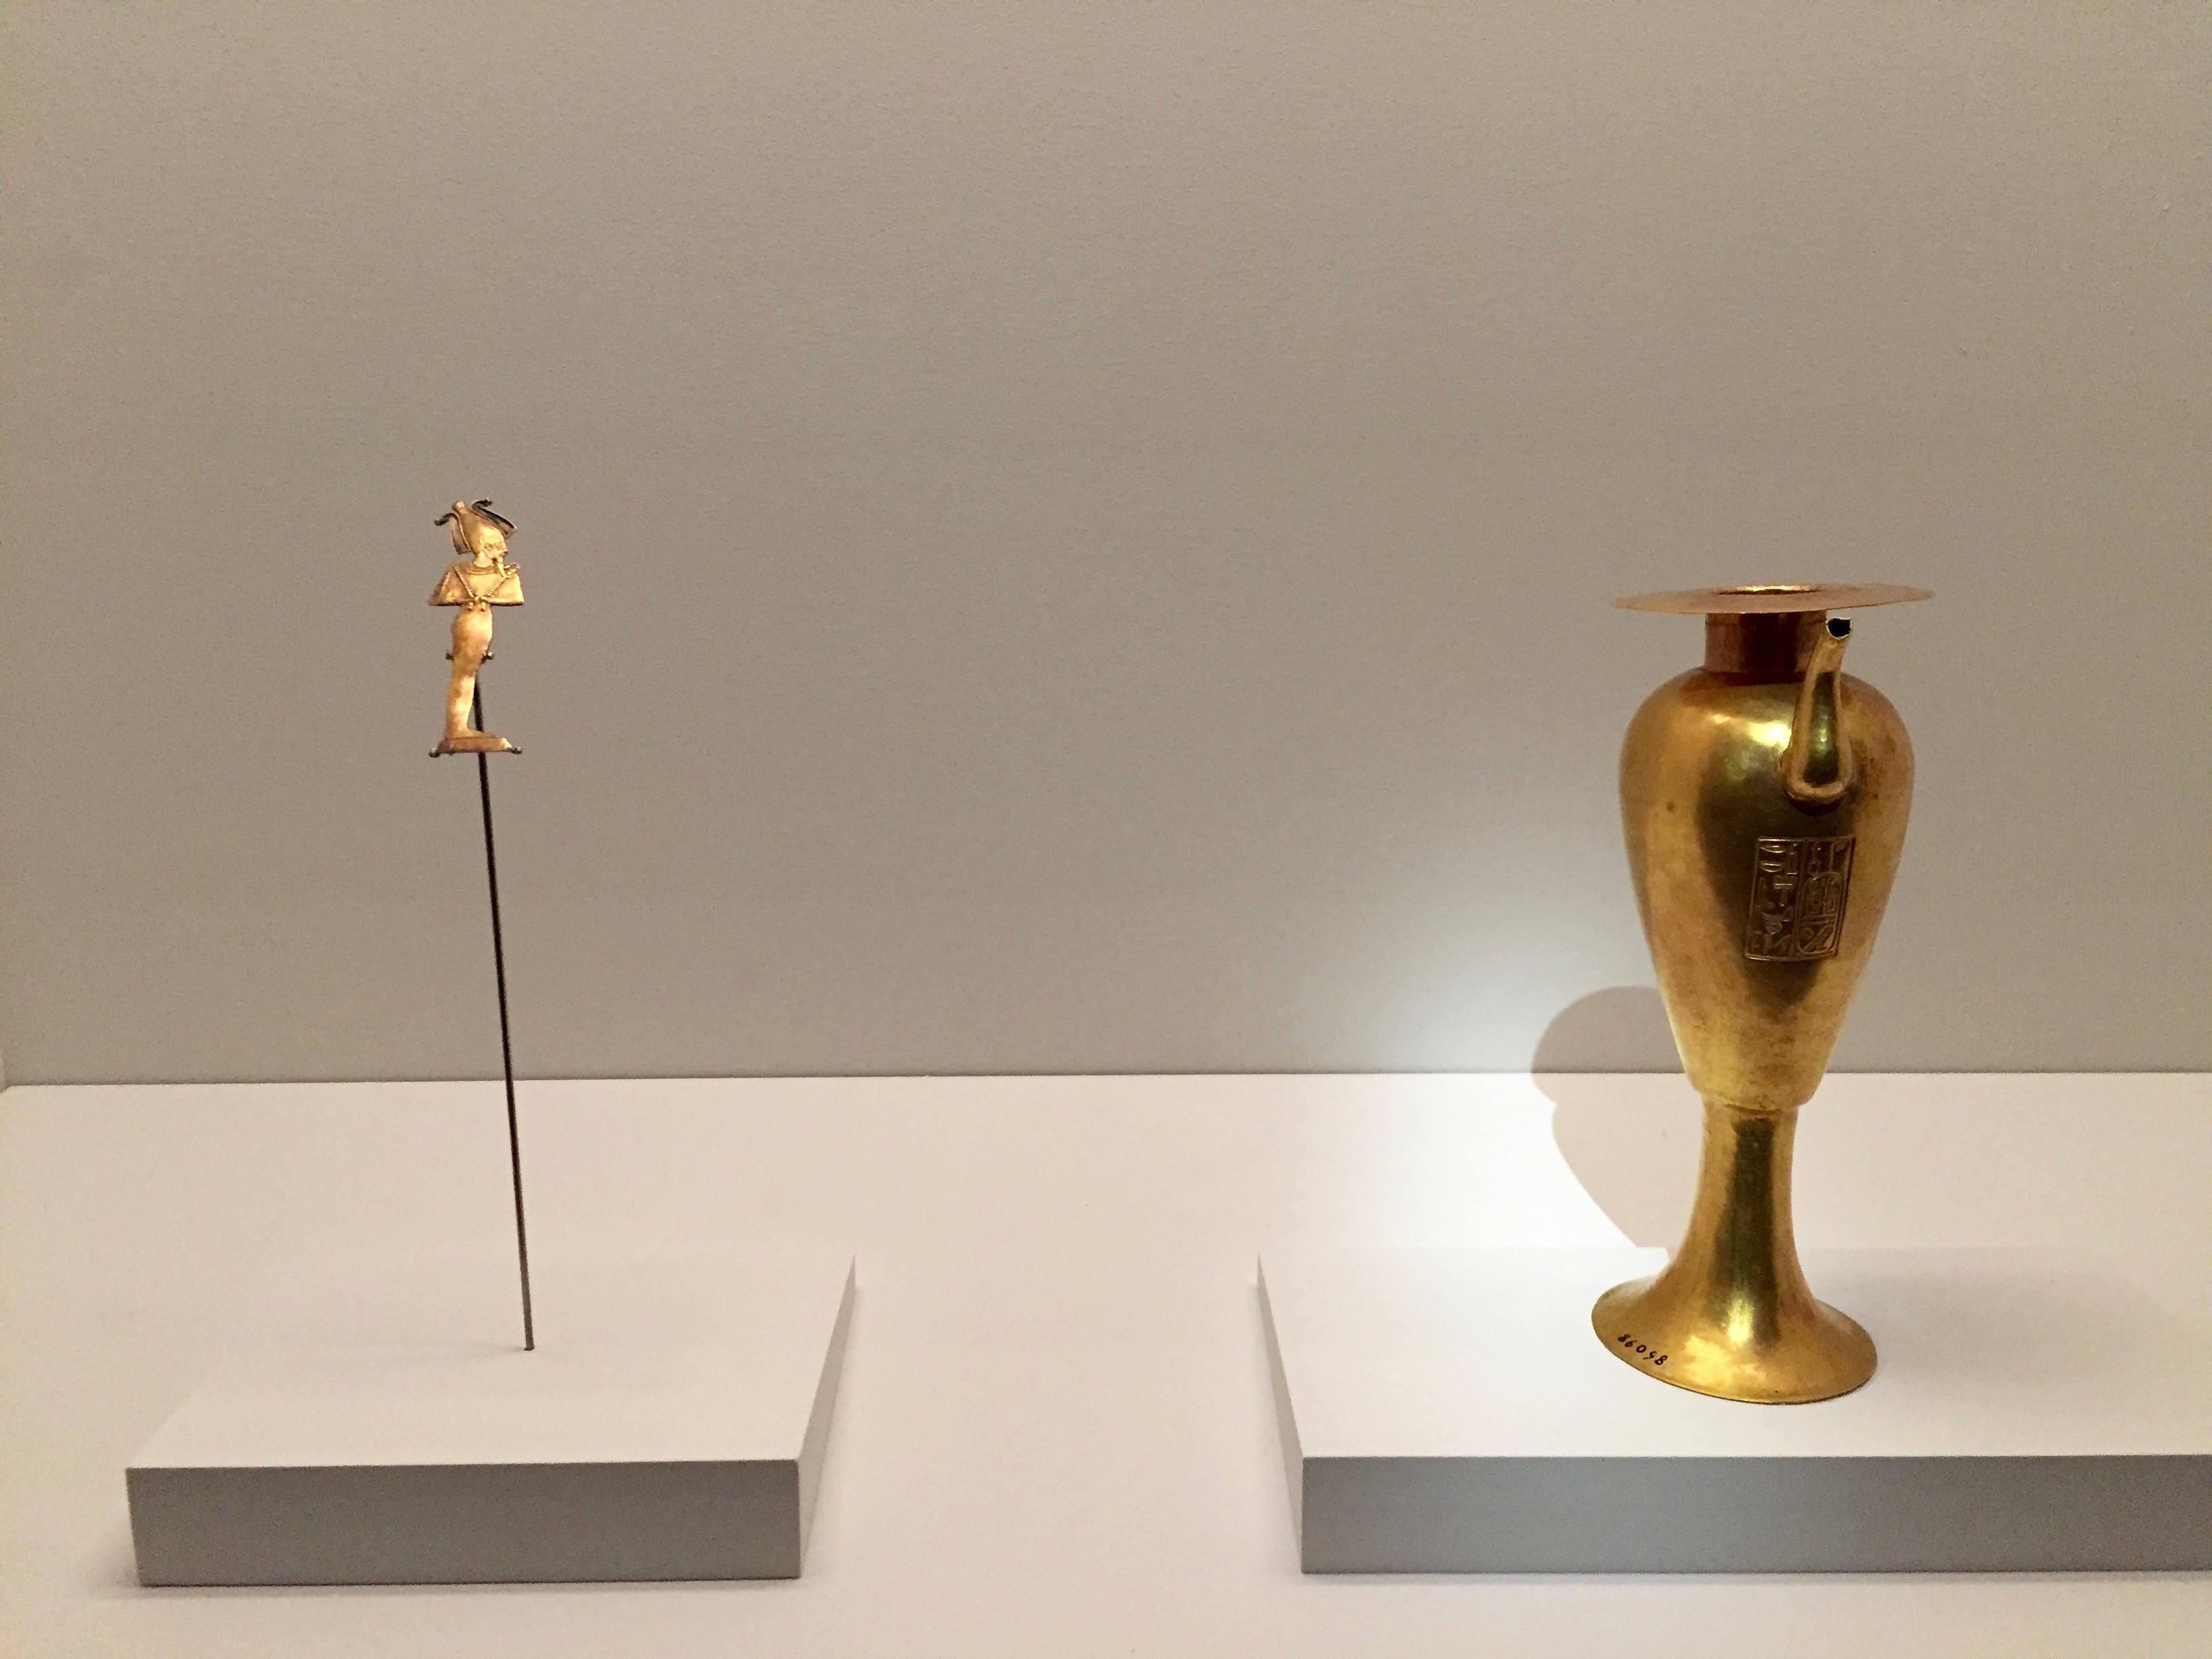 Minneapolis Institute of Art: Egypt's Sunken Cities, Gold Figure and Ewer